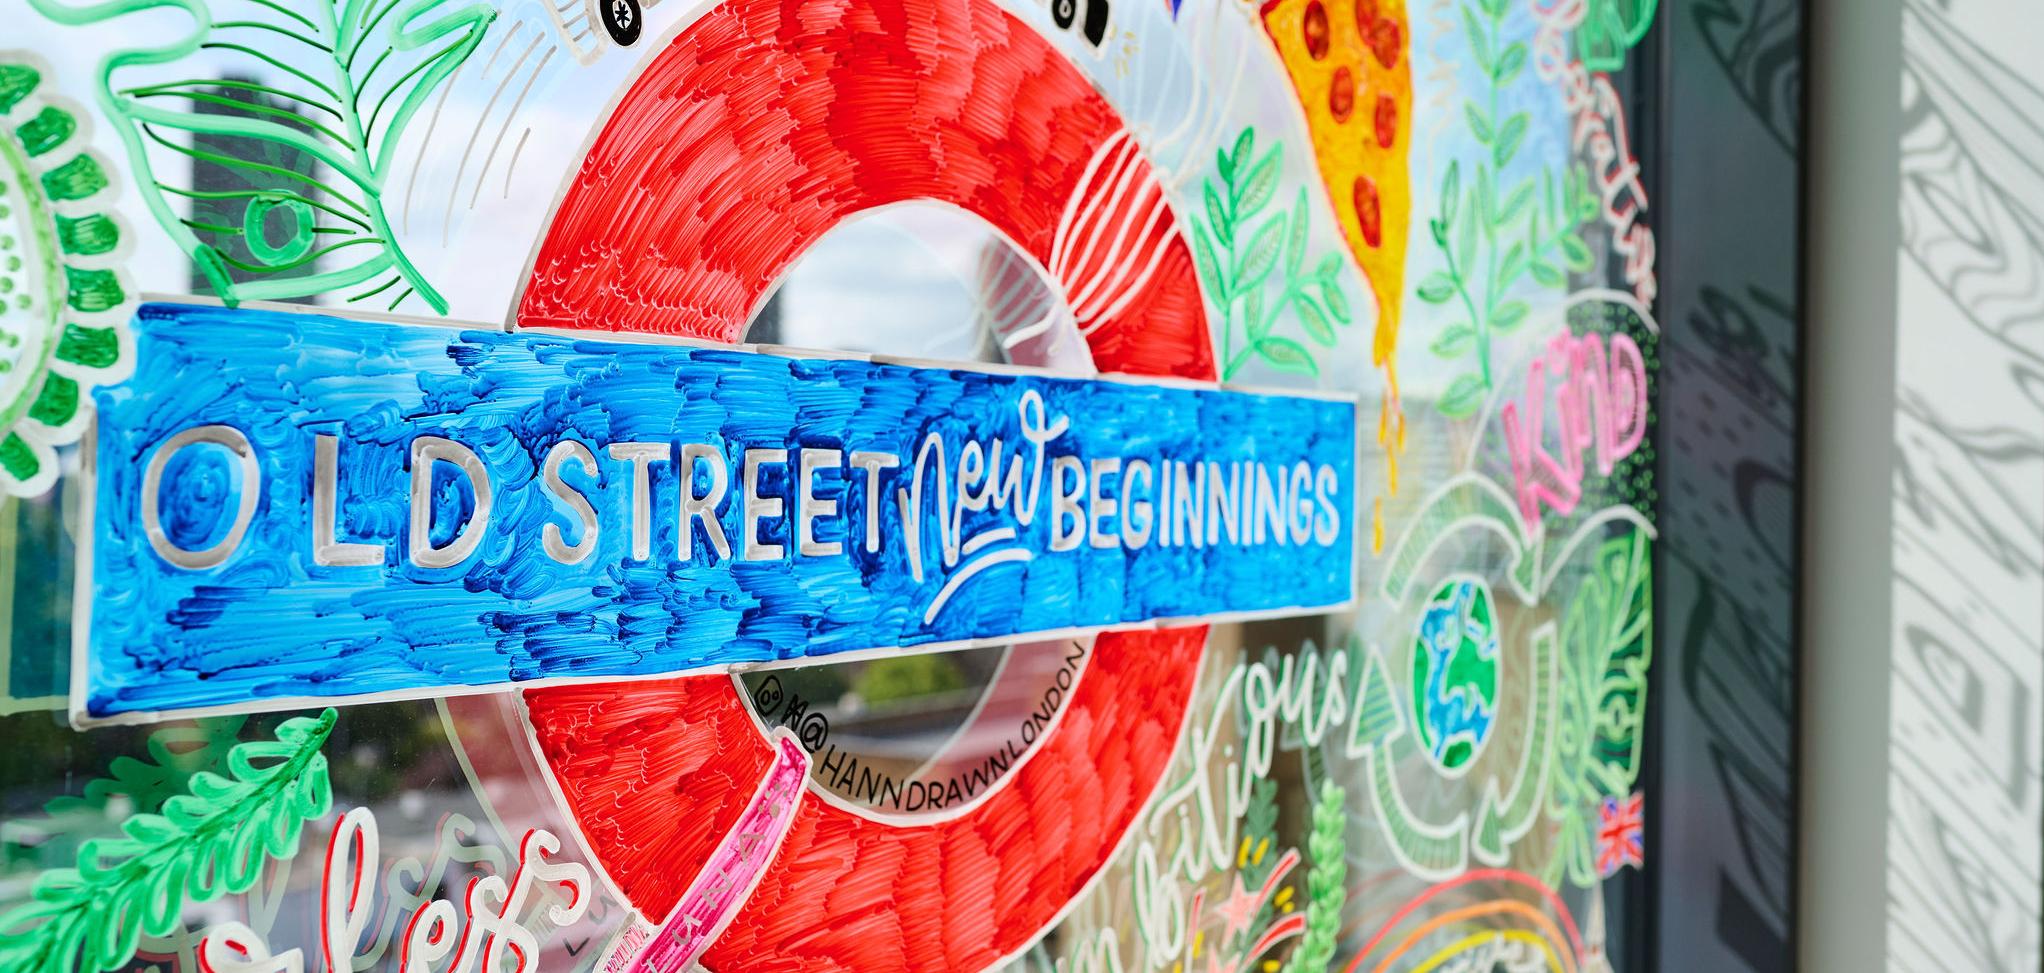 Photo of an artwork depicting the London Underground symbol